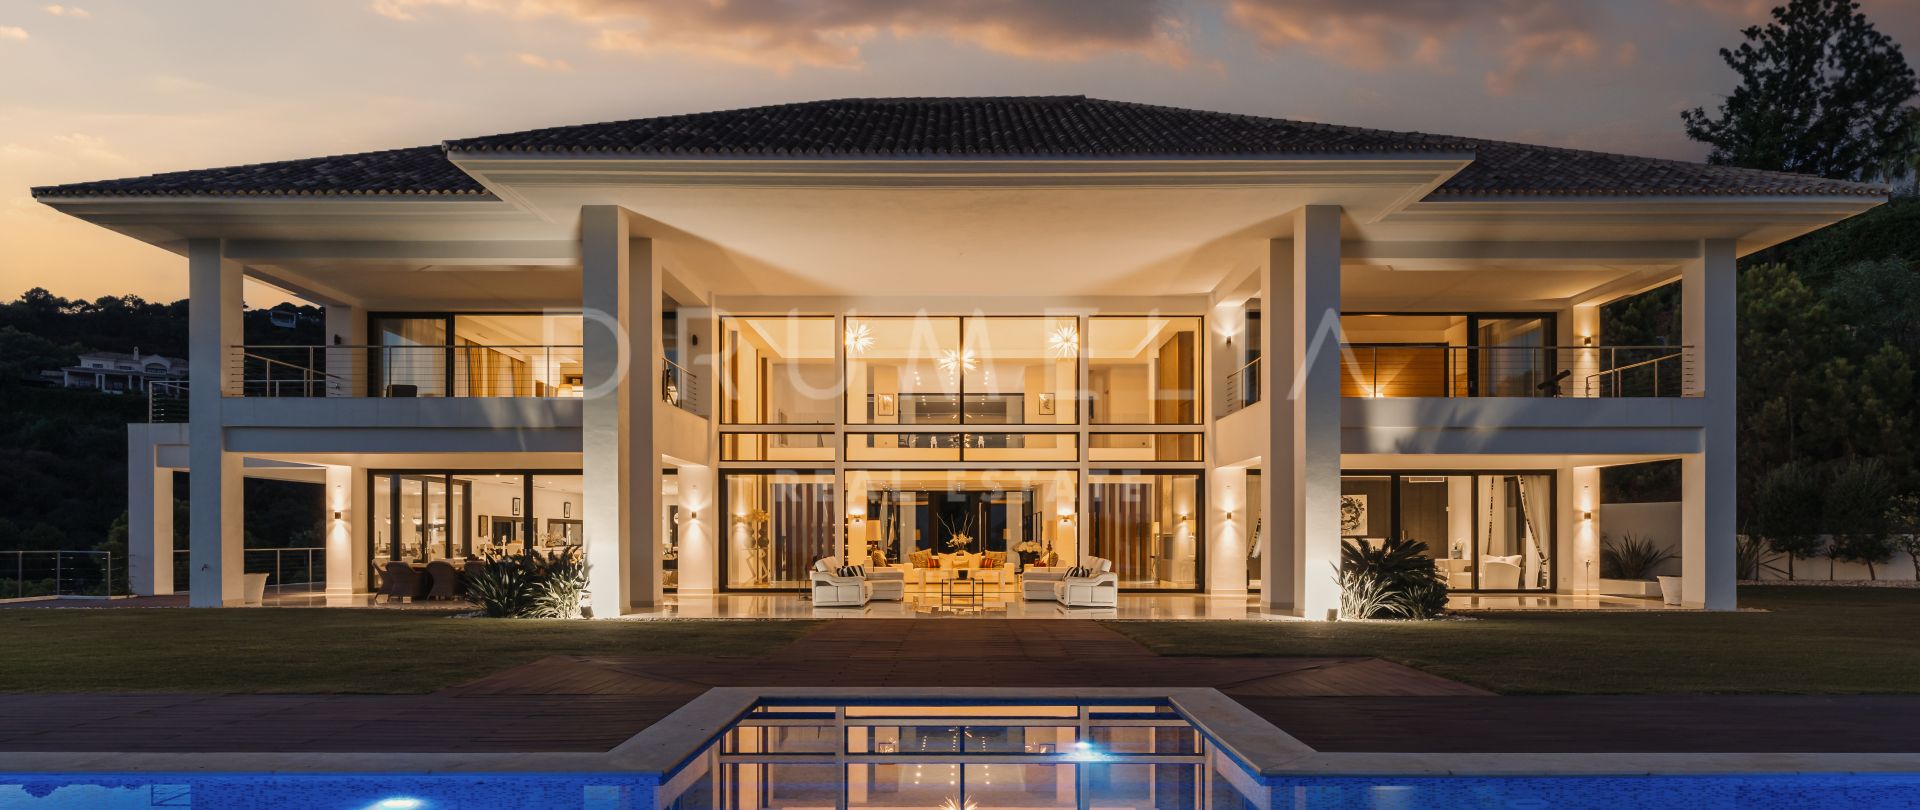 Villa Shiro - Atemberaubendes modernes High-End-Haus in La Zagaleta, Benahavis, zu verkaufen